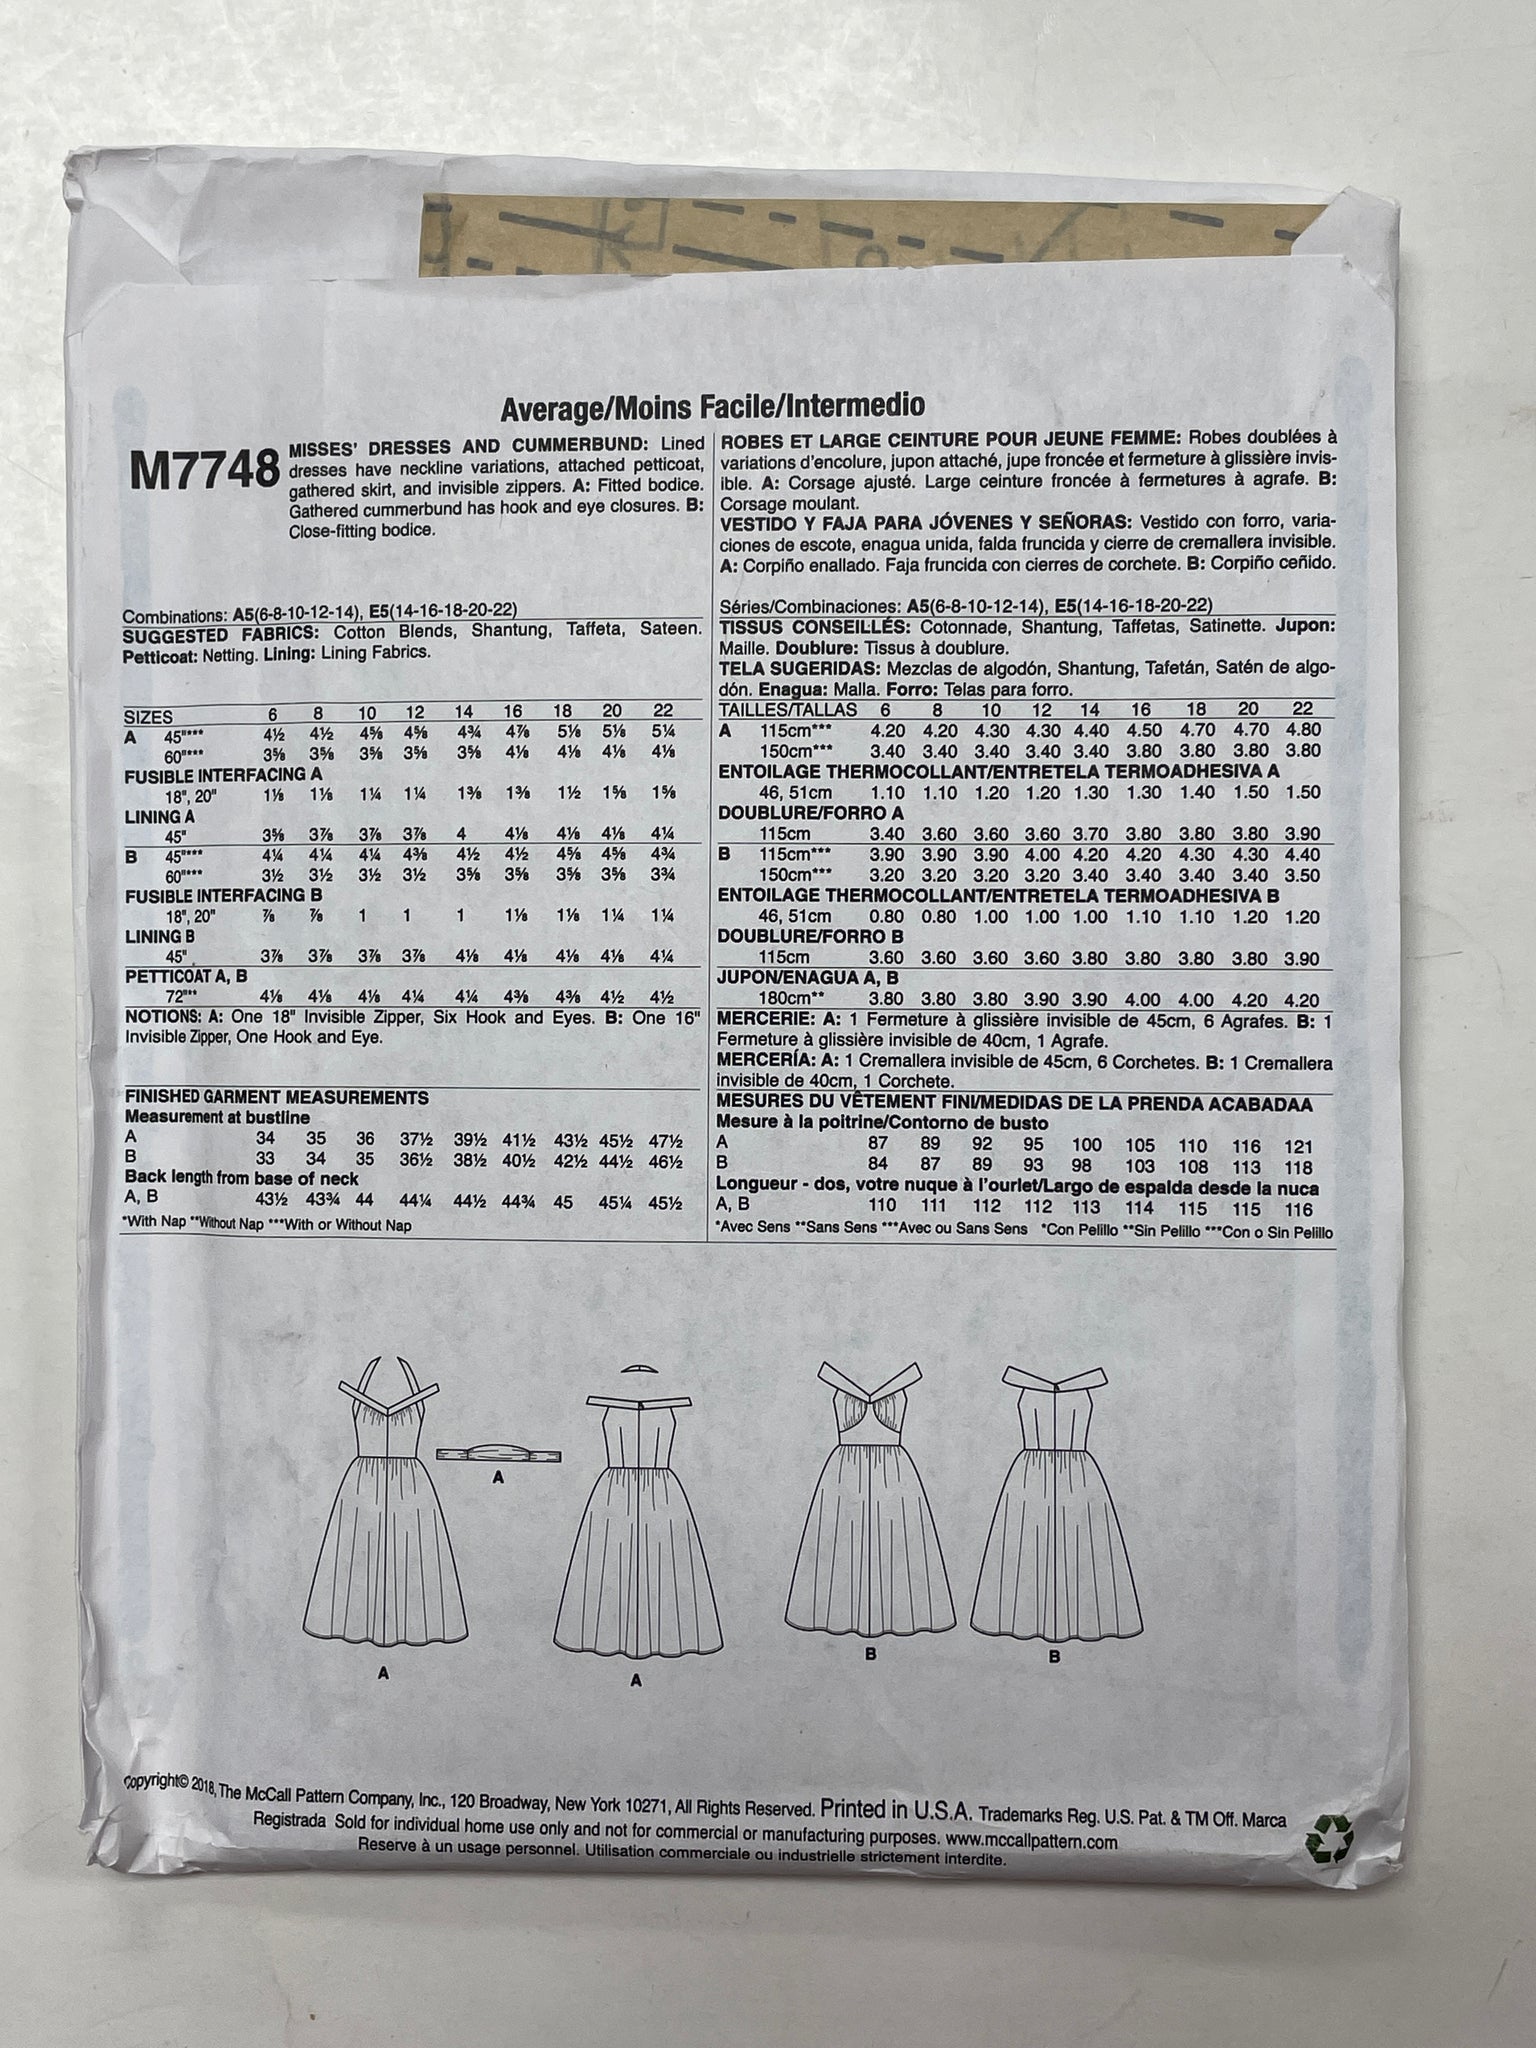 2018 McCall's 7748 Pattern - Retro Dress c. 1957 FACTORY FOLDED